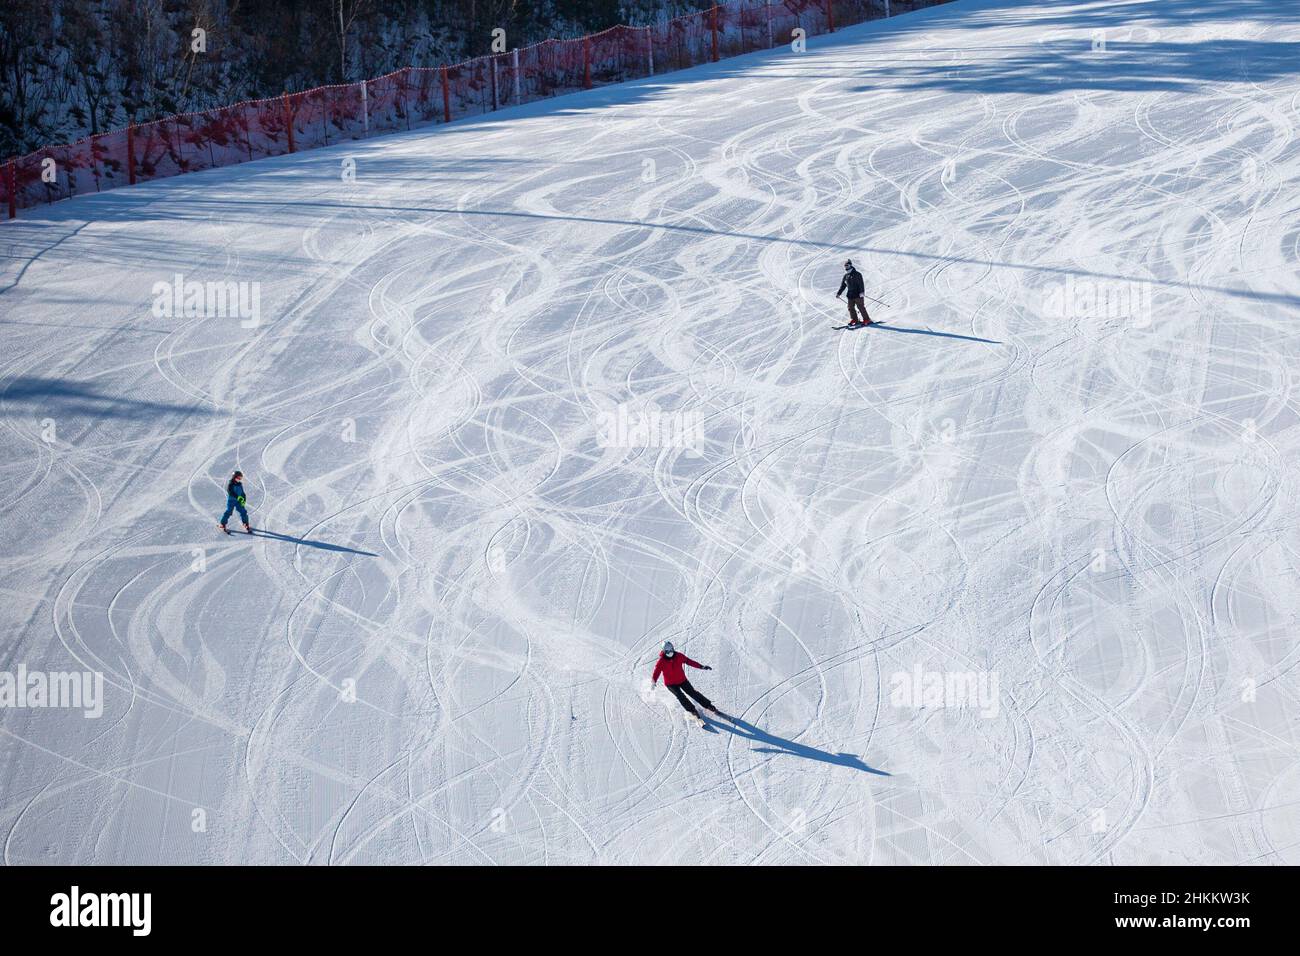 Estación de esquí de alpensia fotografías e imágenes de alta resolución -  Alamy